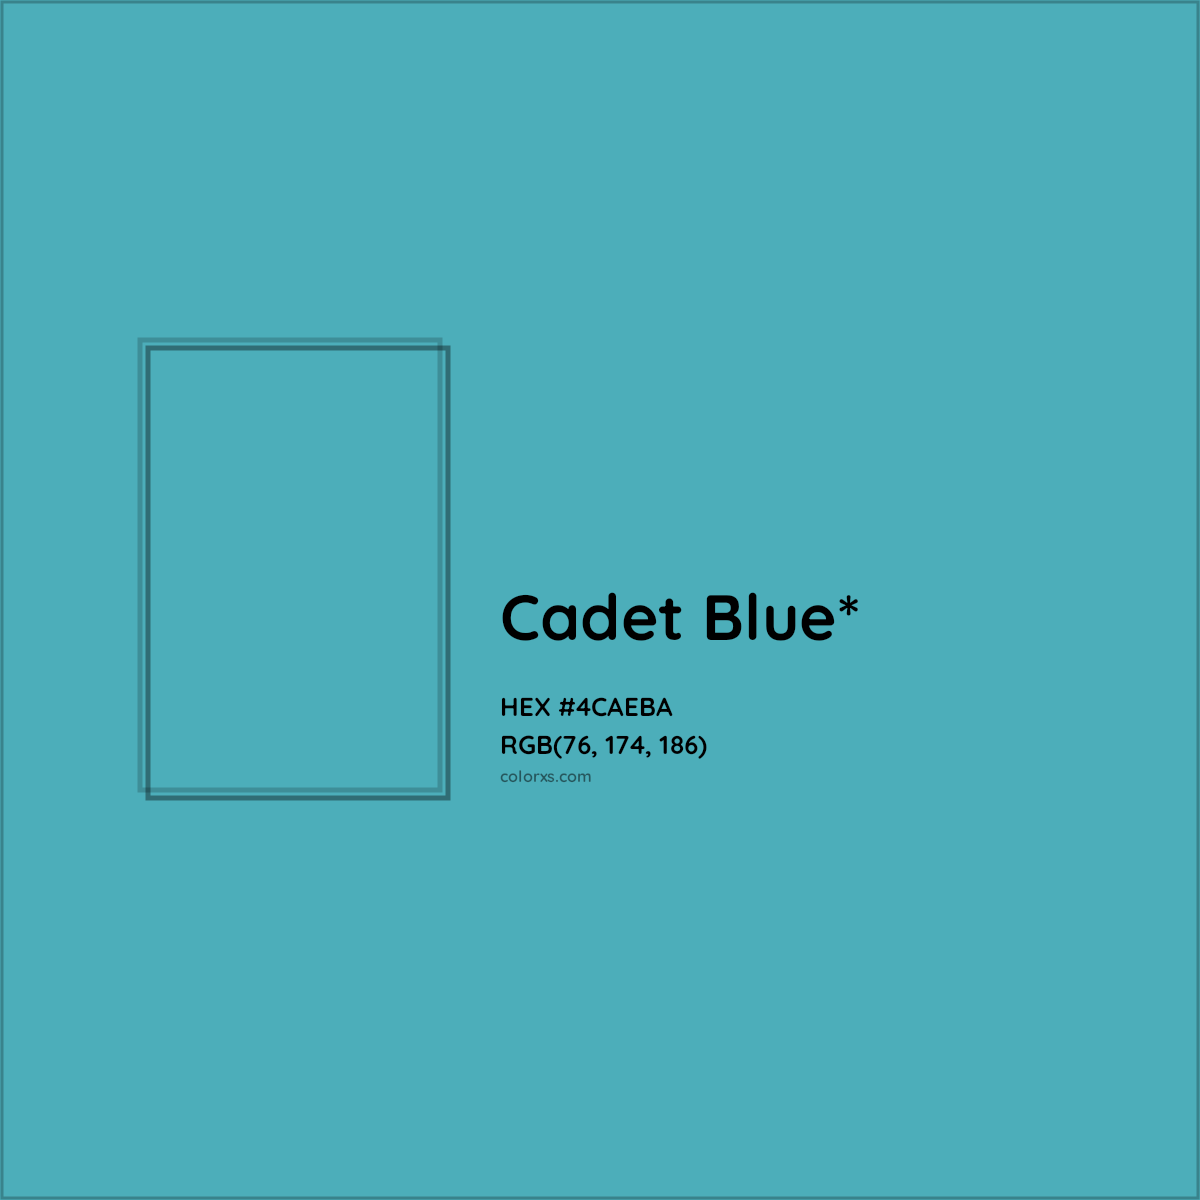 HEX #4CAEBA Color Name, Color Code, Palettes, Similar Paints, Images